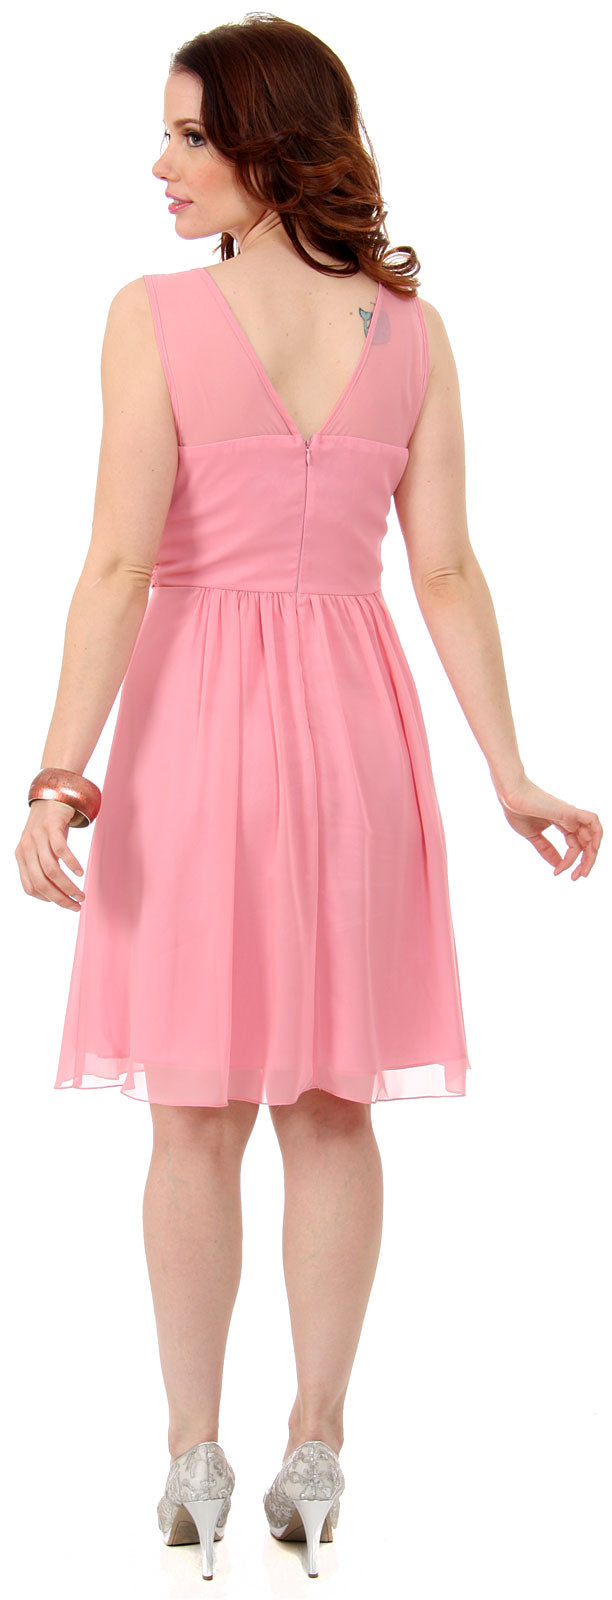 Image of Semi Sheer Top Chiffon Short Party Bridesmaid Dress back in Dusty Pink